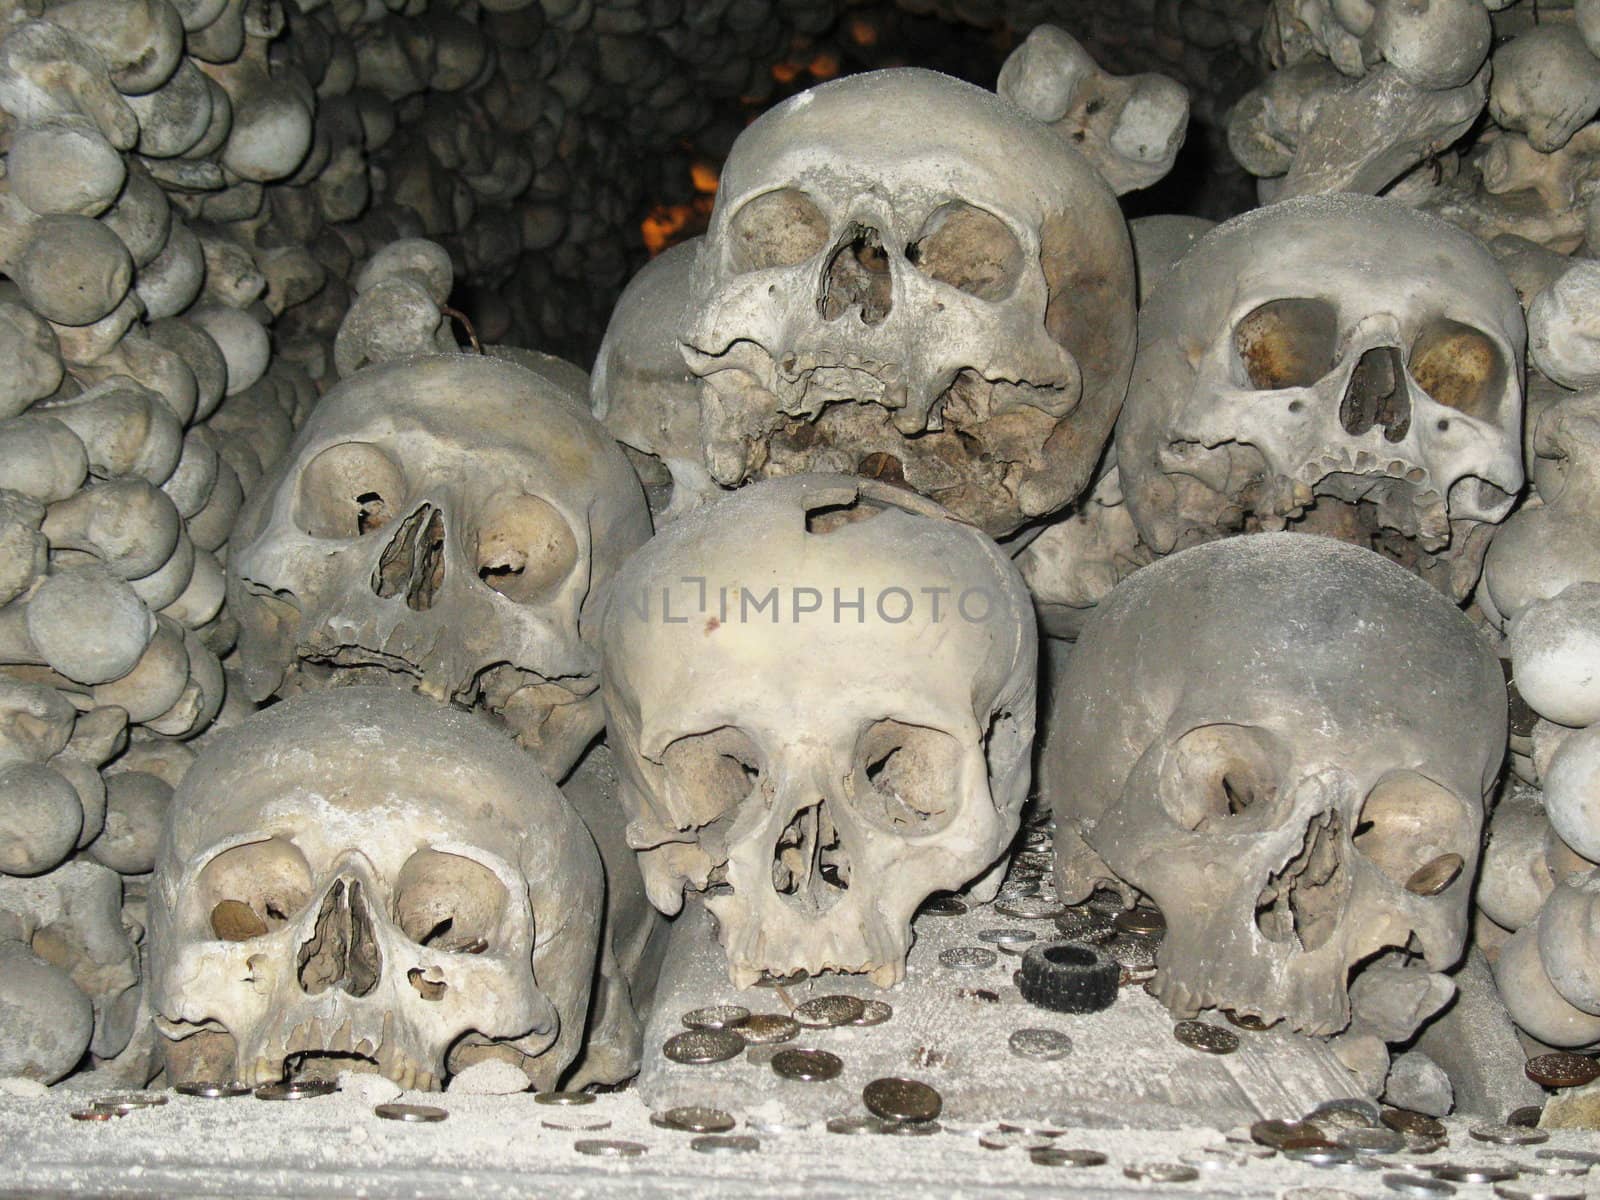 Humam skulls and bones in Kutna Hora church Czechia